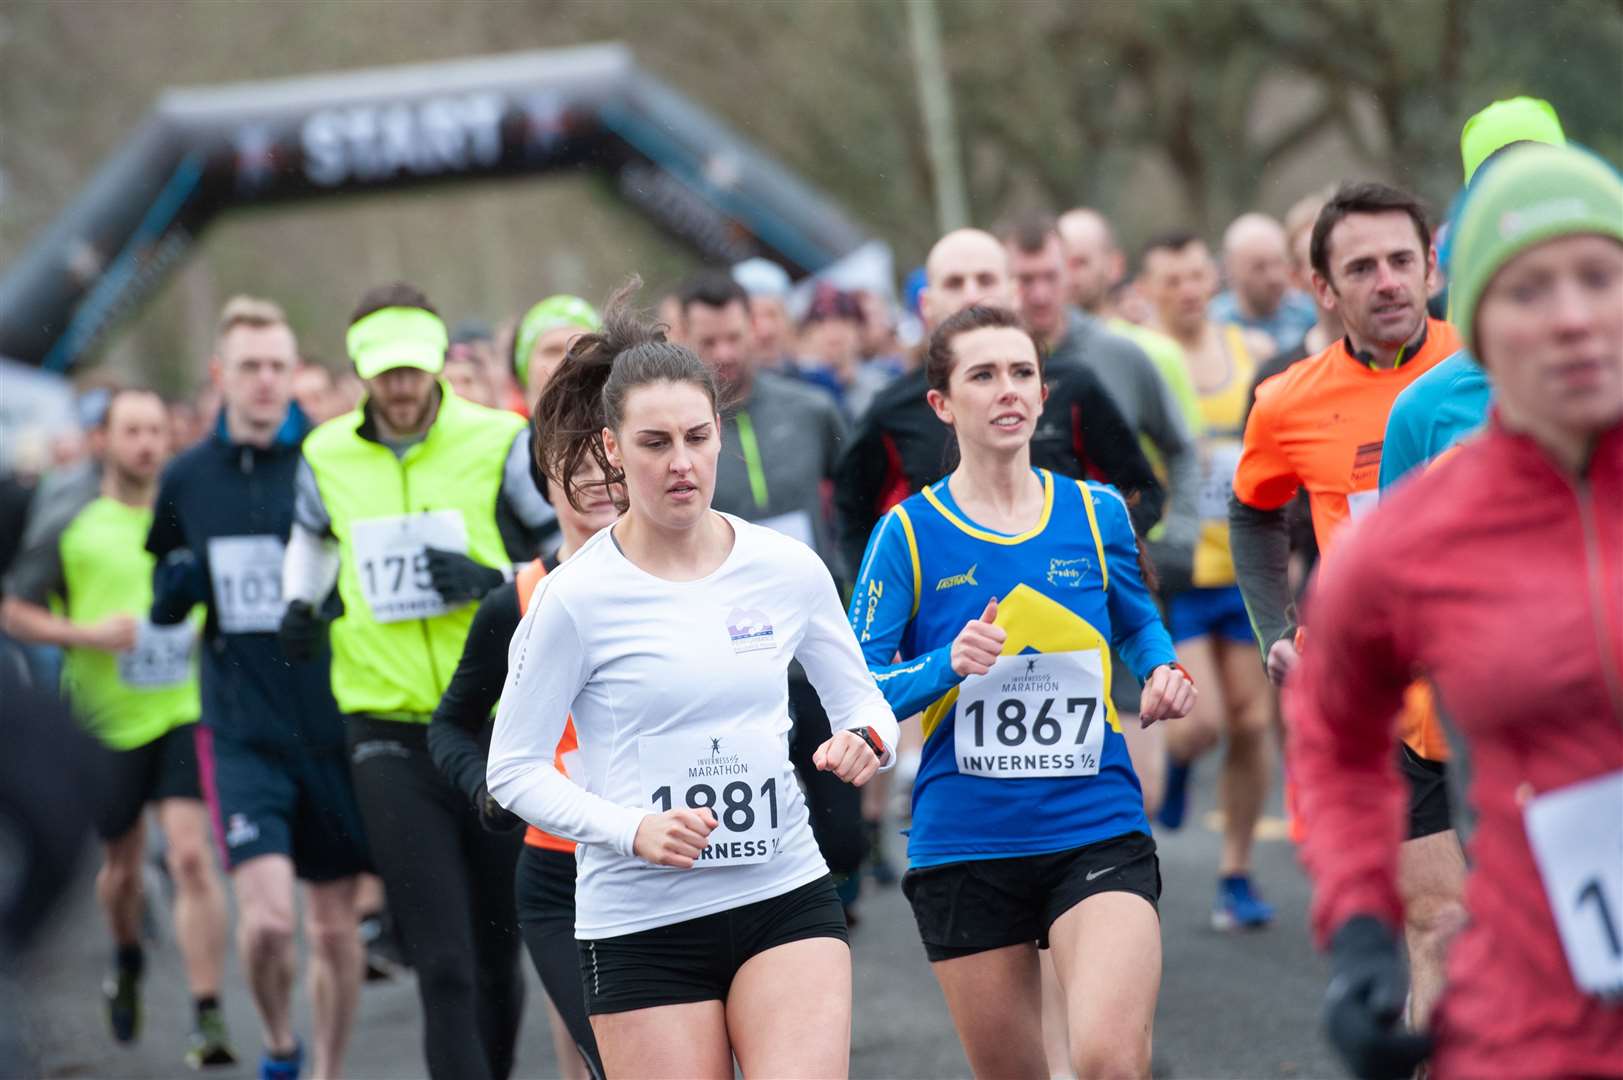 Inverness Half Marathon takes place on Sunday, March 8.